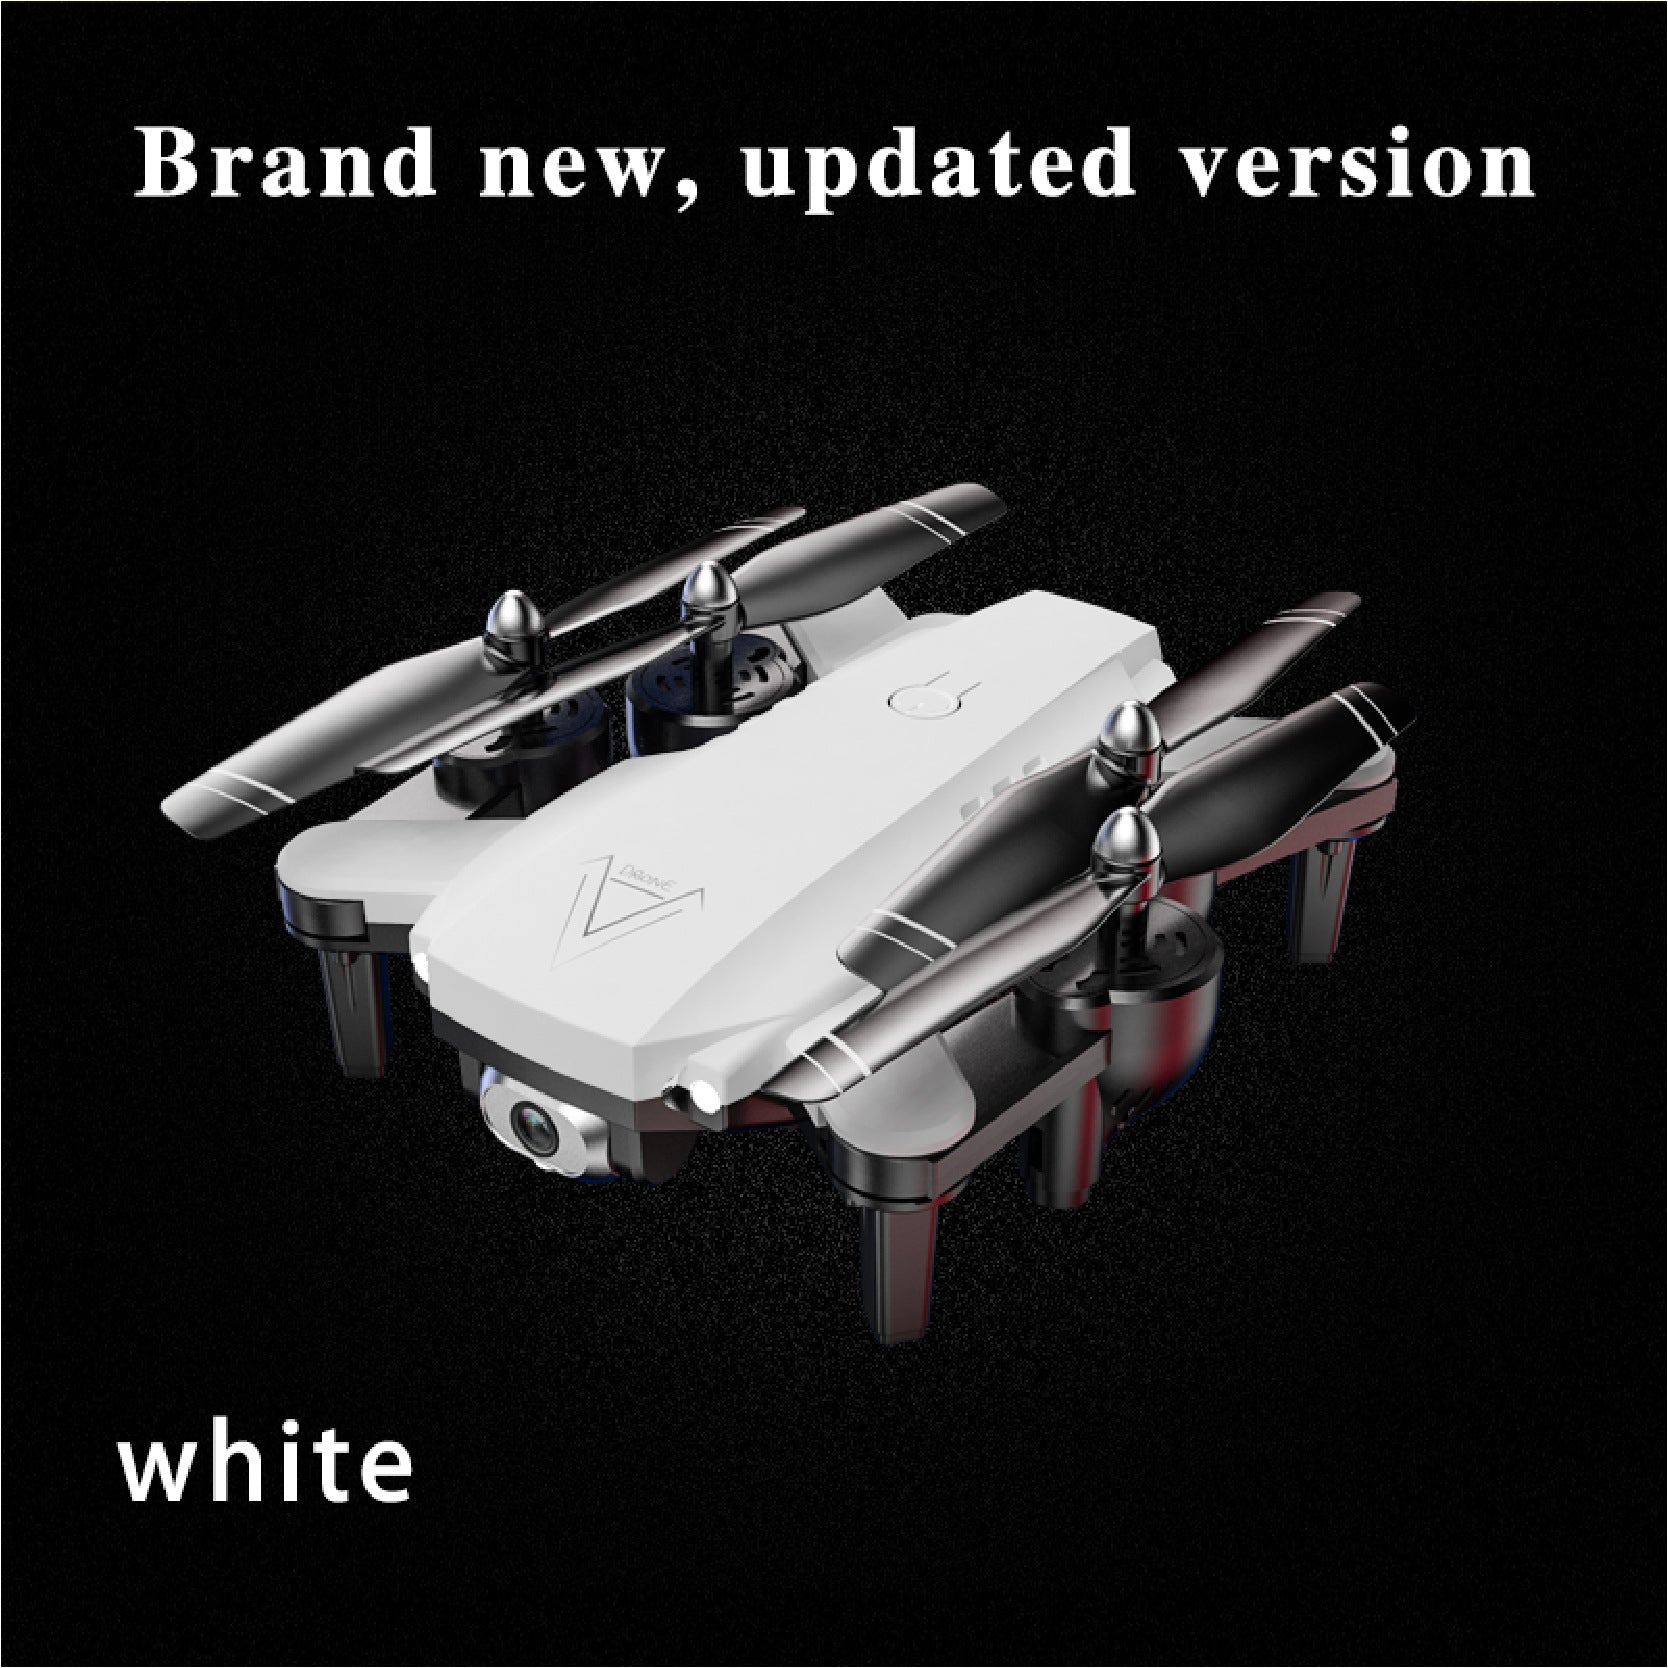 L103 folding drone